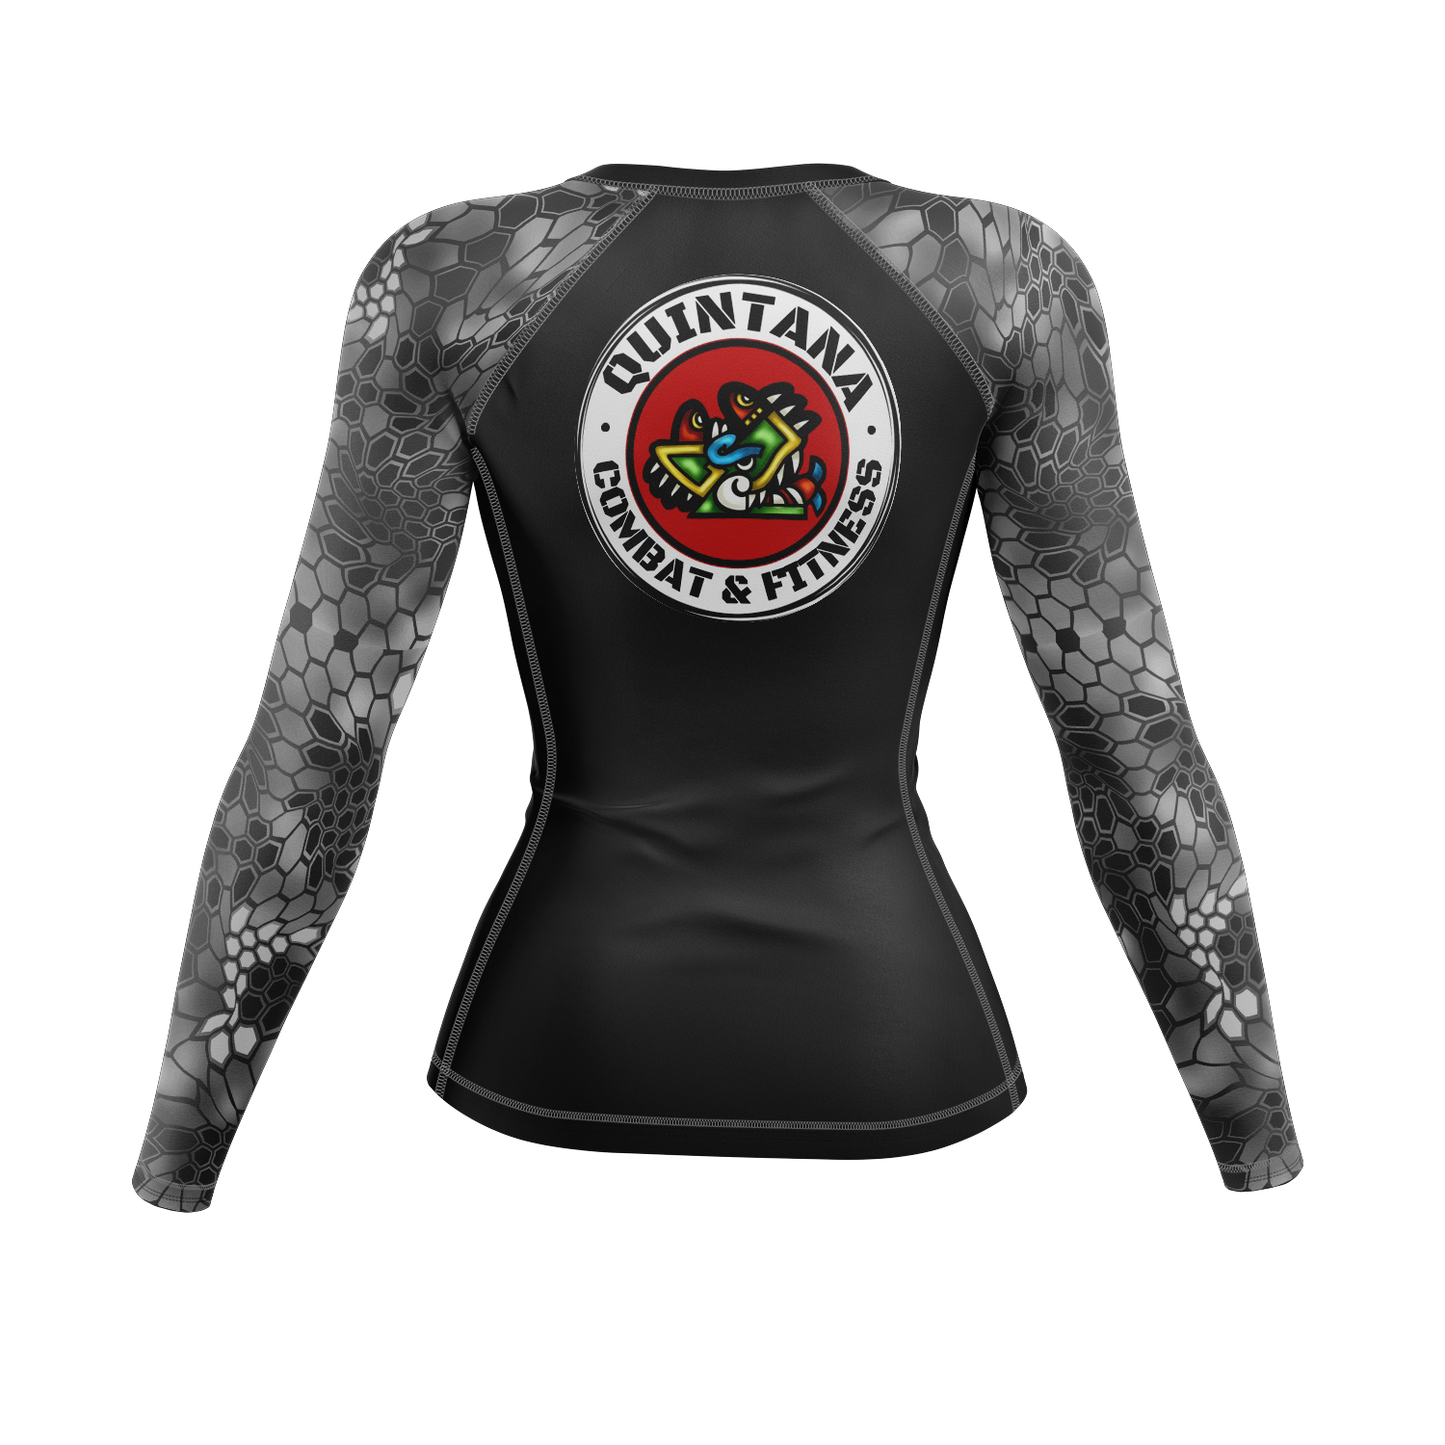 Quintana Combat & Fitness women's rash guard Standard Issue, black and grey